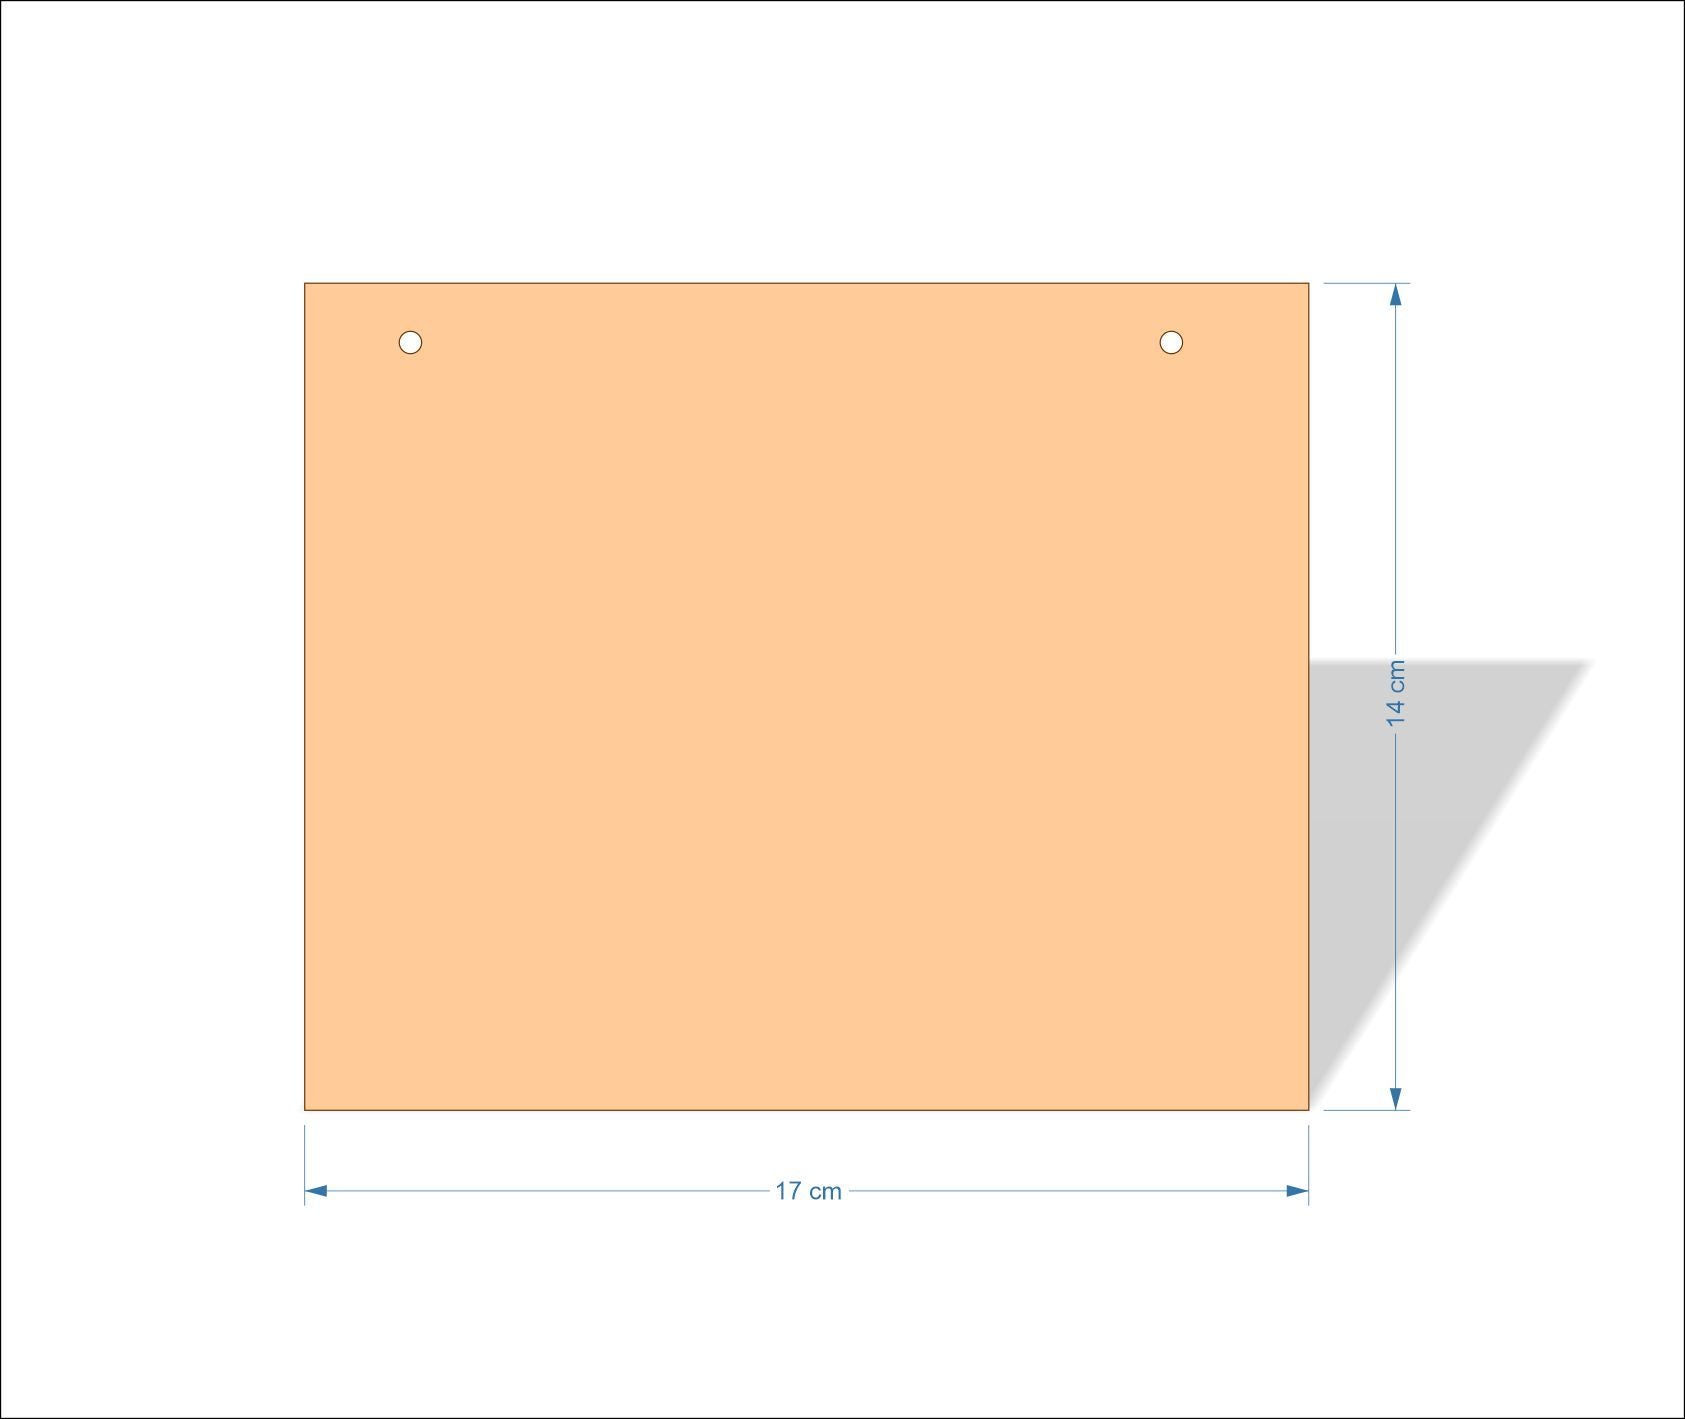 17 cm X 14 cm 3mm MDF Plaques with square corners